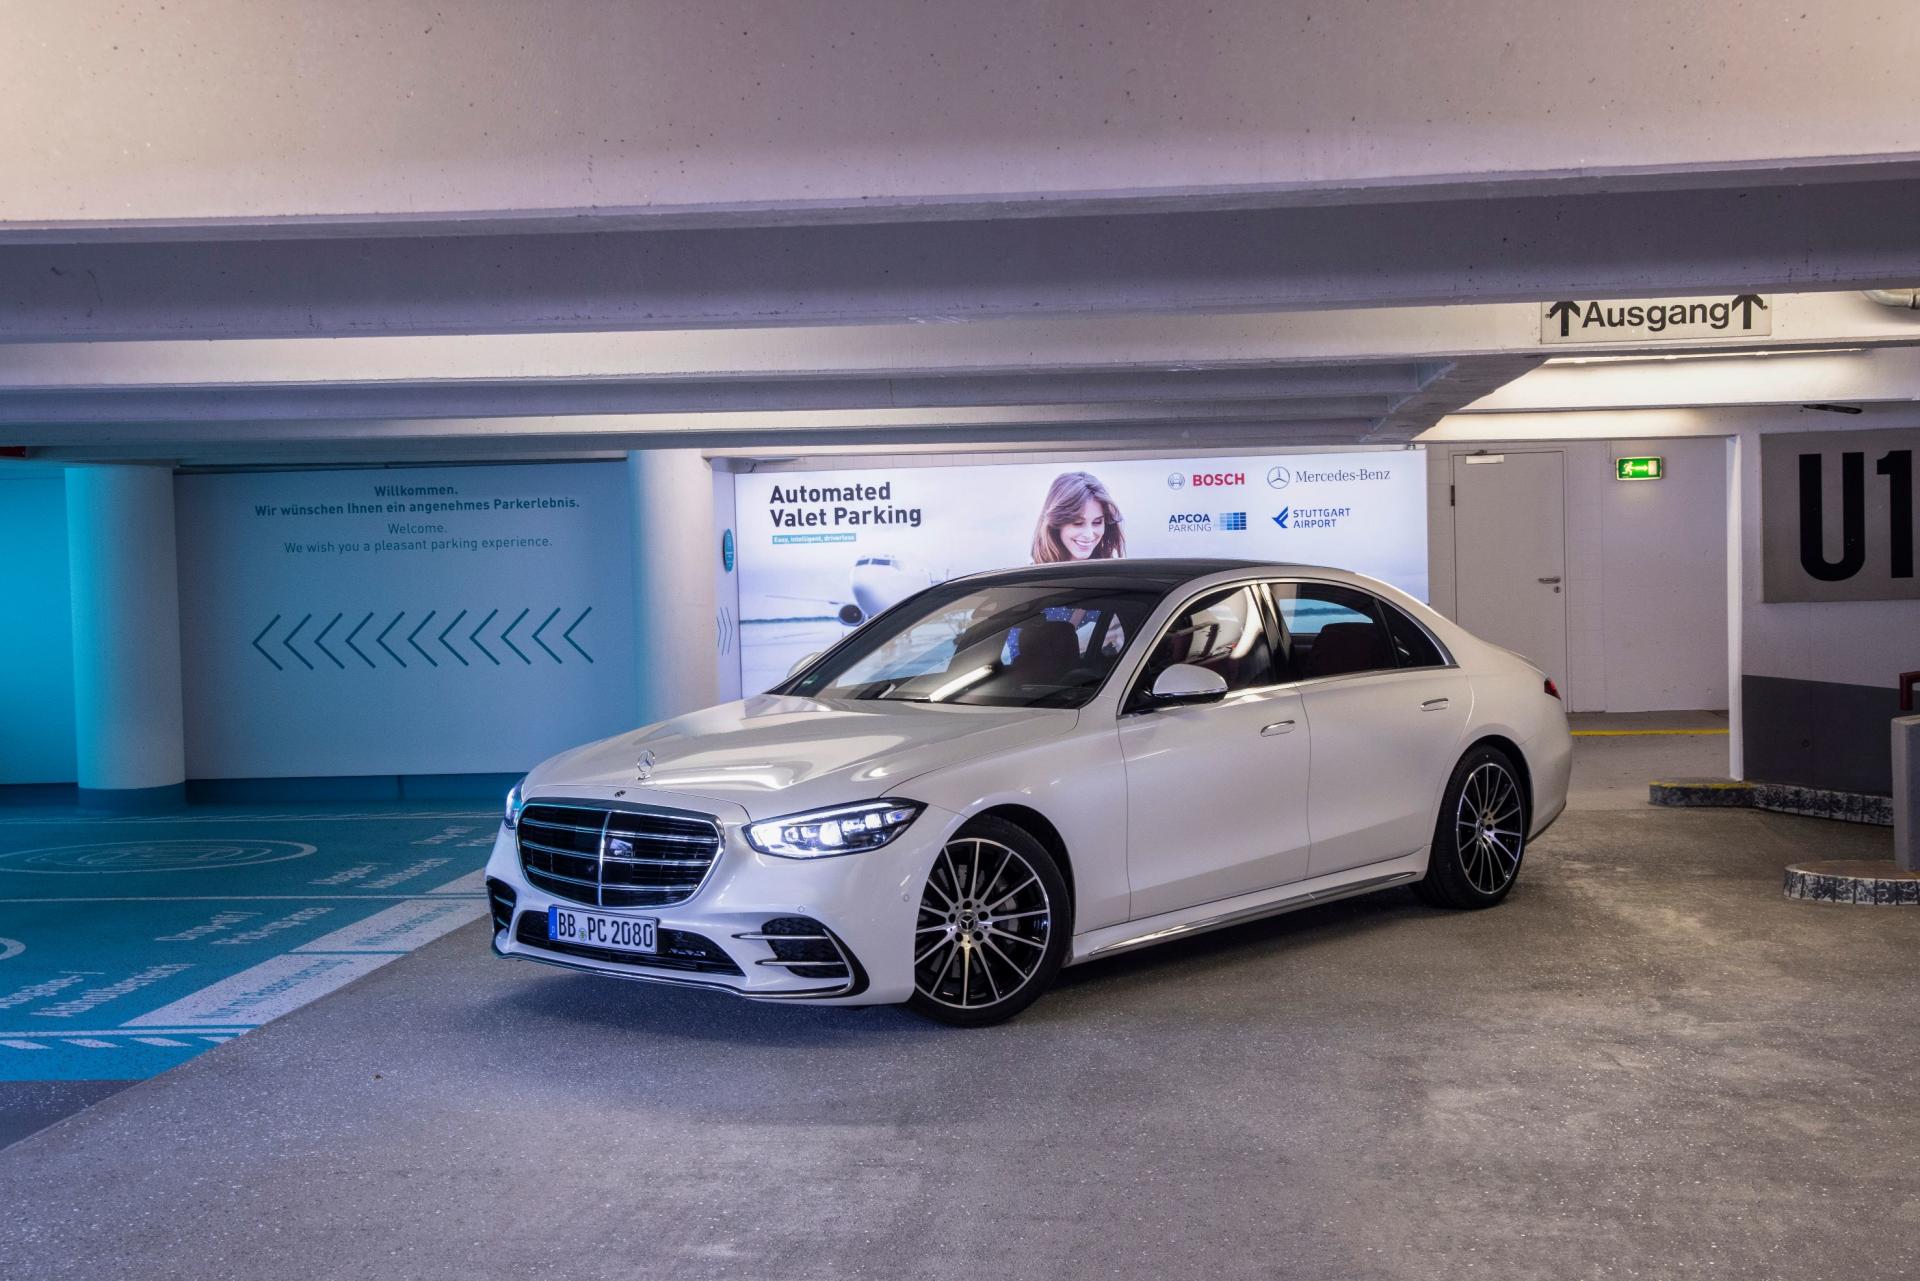 Auto Klub Foto, video Mercedes Sklasa u Hrvatskoj s